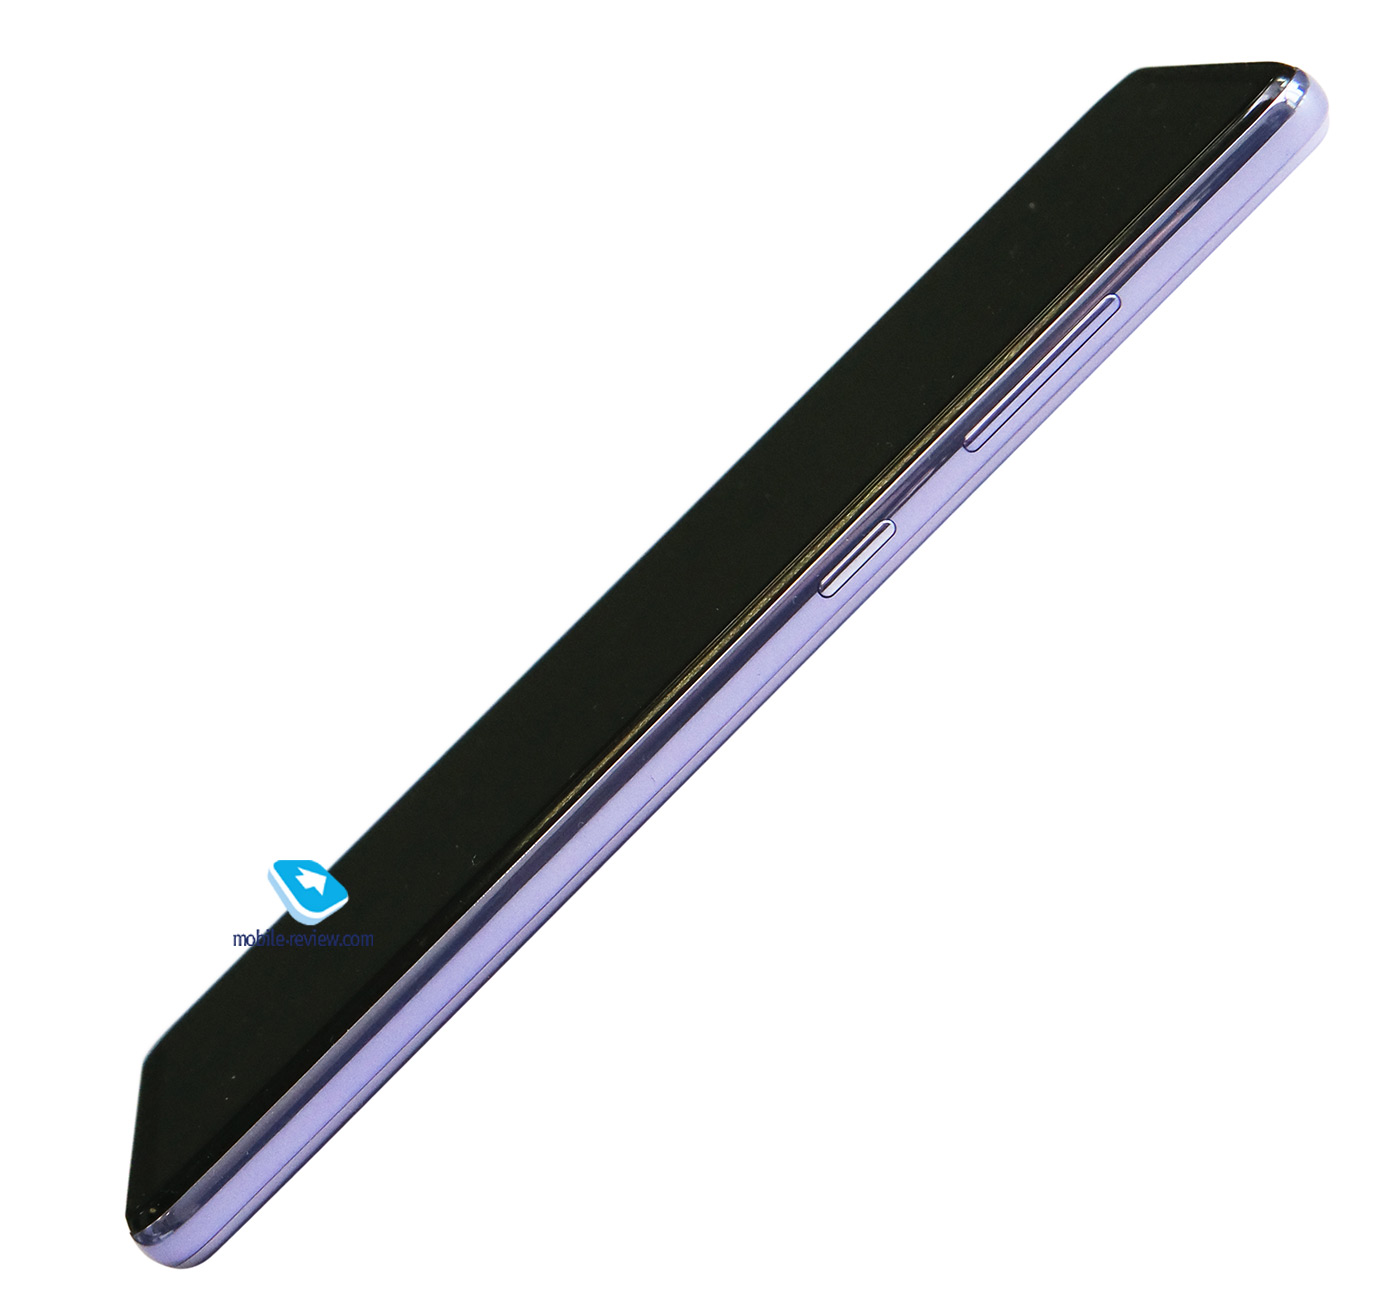 Обзор смартфона Samsung Galaxy A72 (SM-A725F/DS)